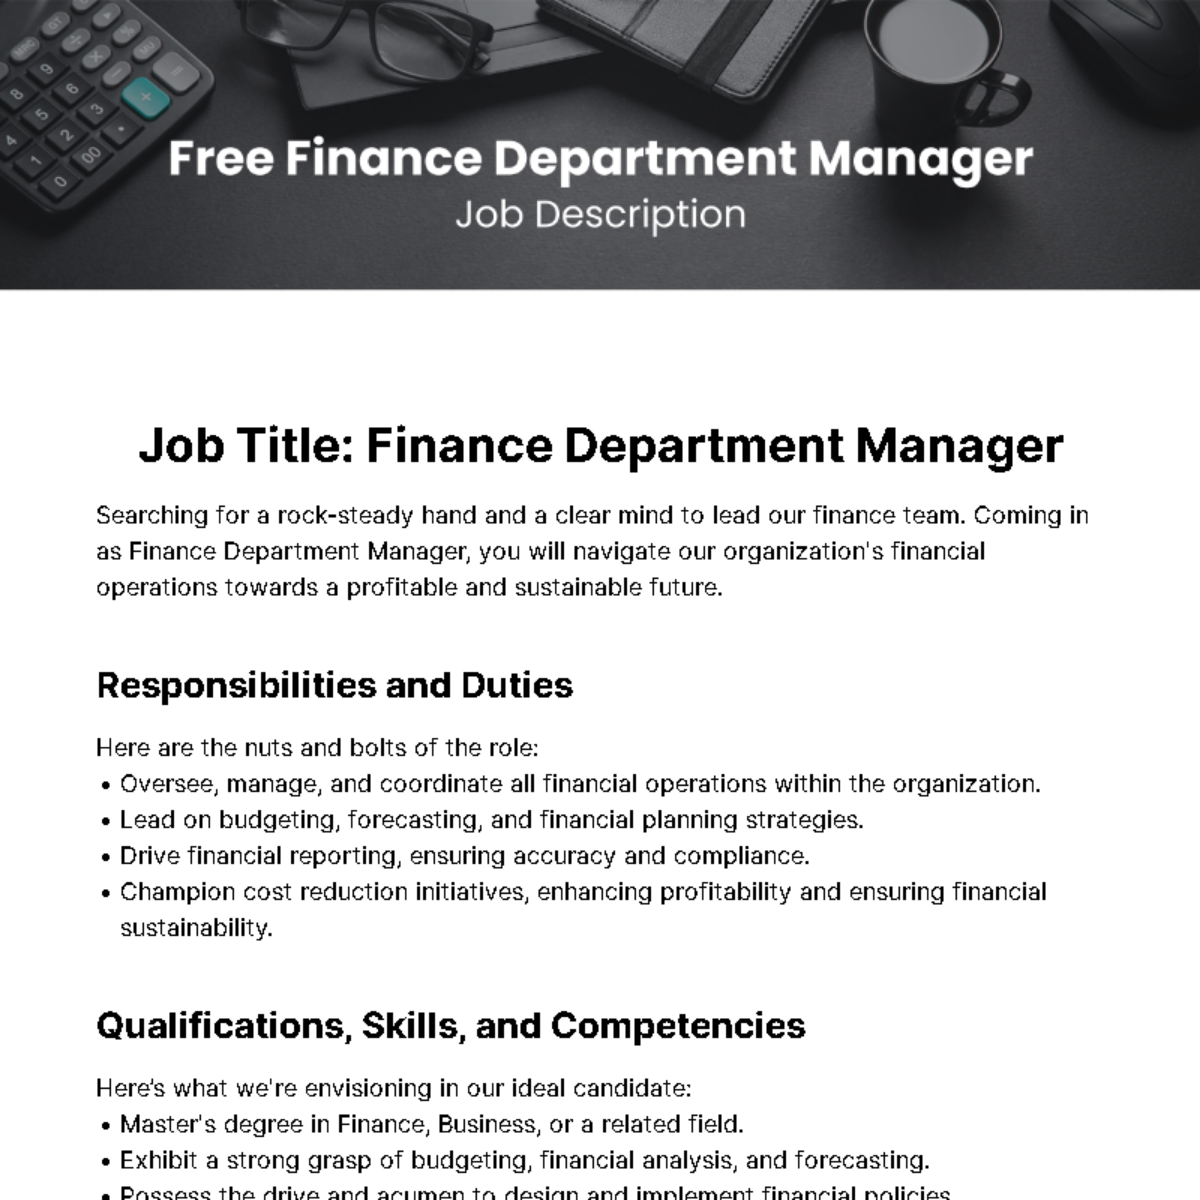 Finance Department Manager Job Description Template